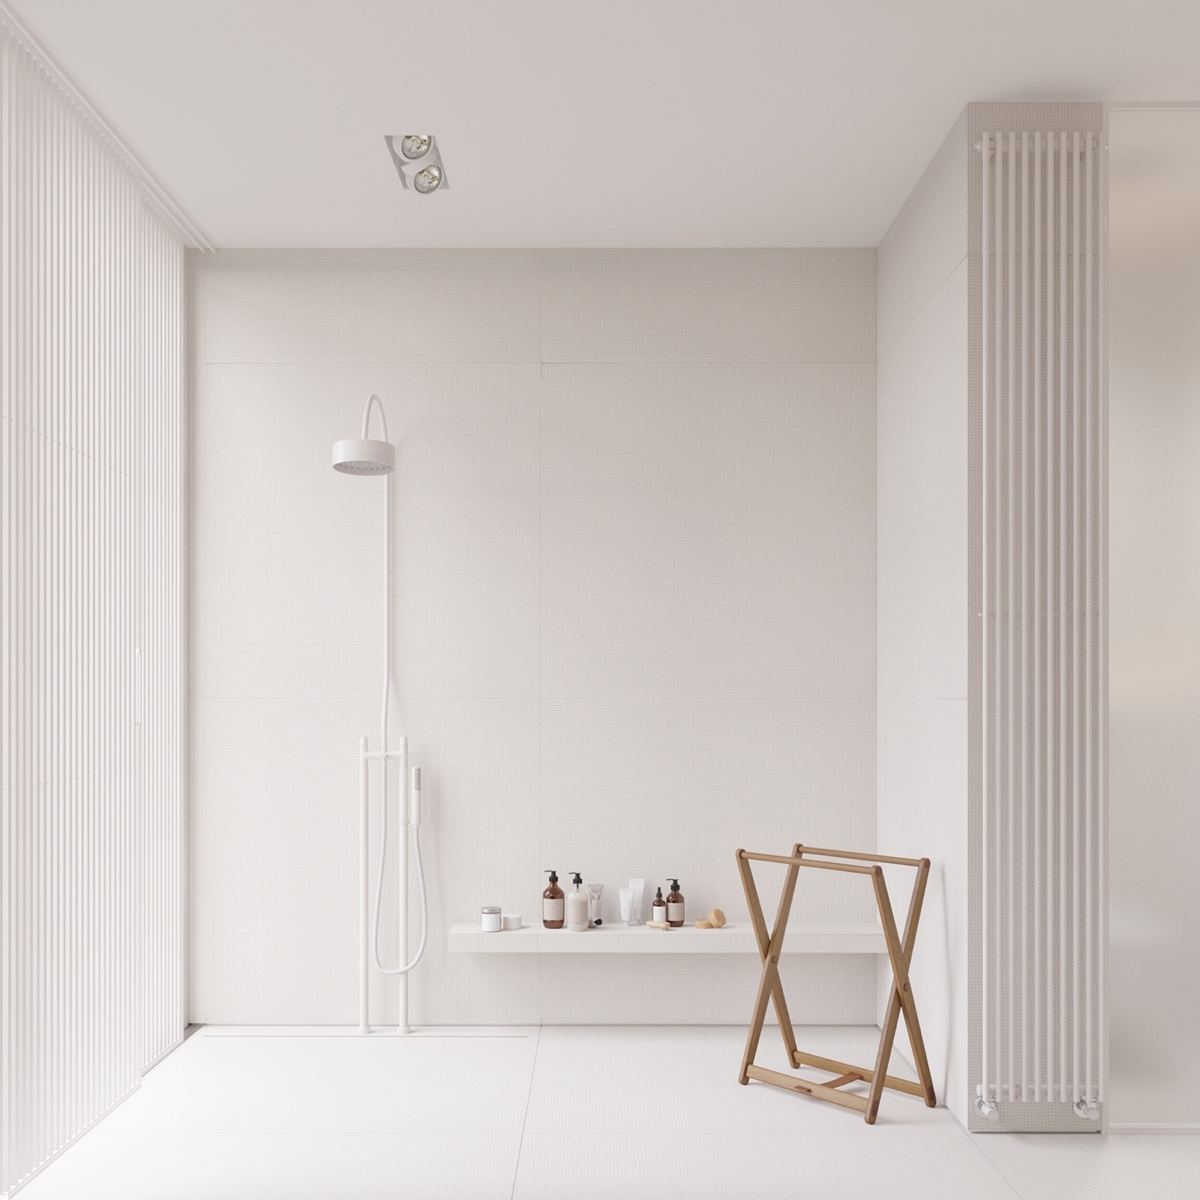 Minimalist shower and bathroom by Igor Sirotov Architects